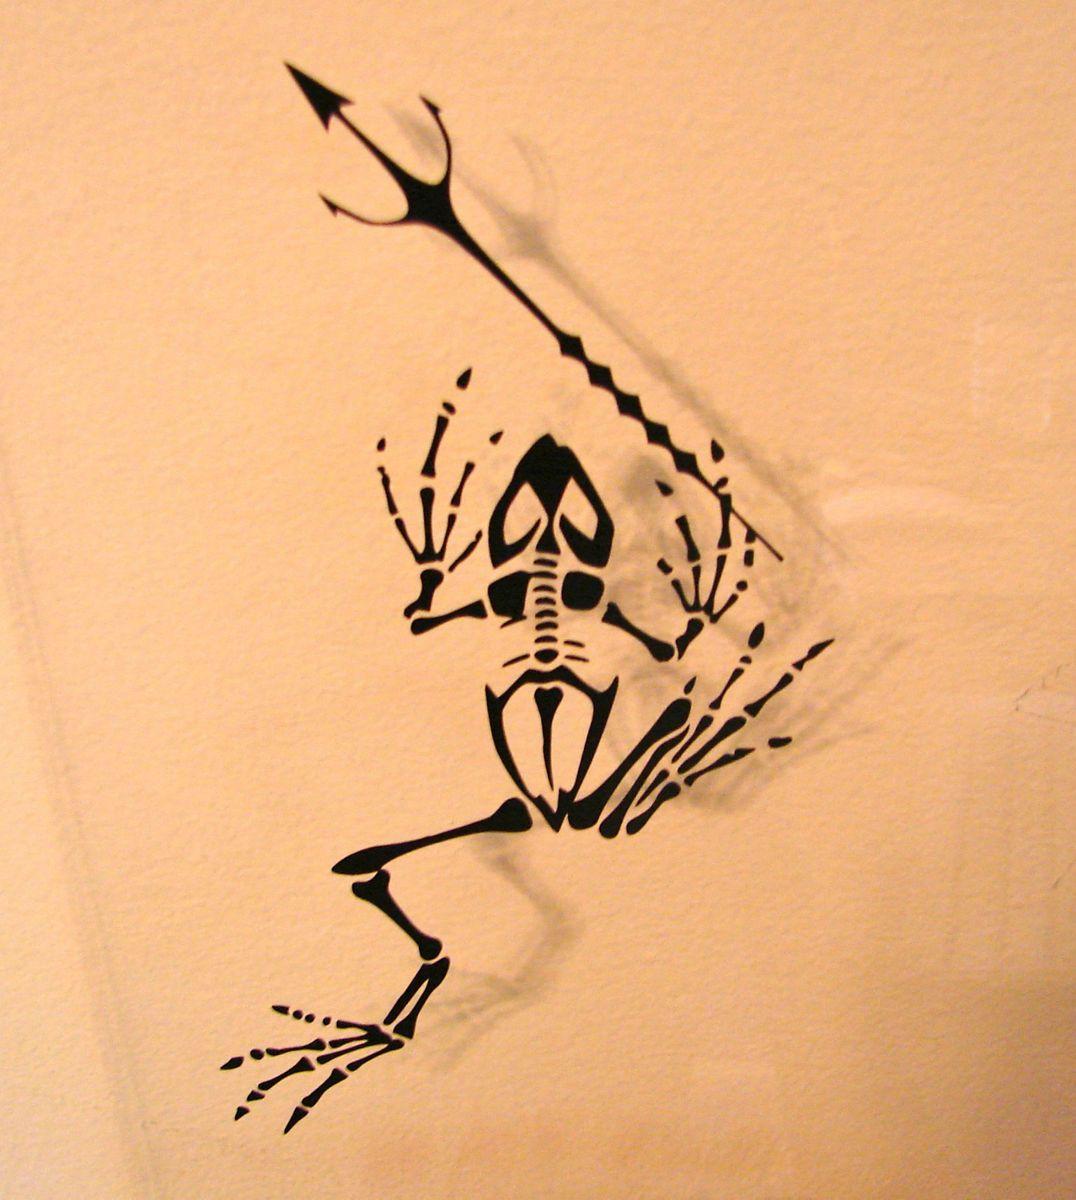 Navy Trident Logo - Navy Seal Decal Team 6 DEVGRU Frog Skeleton trident Real Symbol on ...